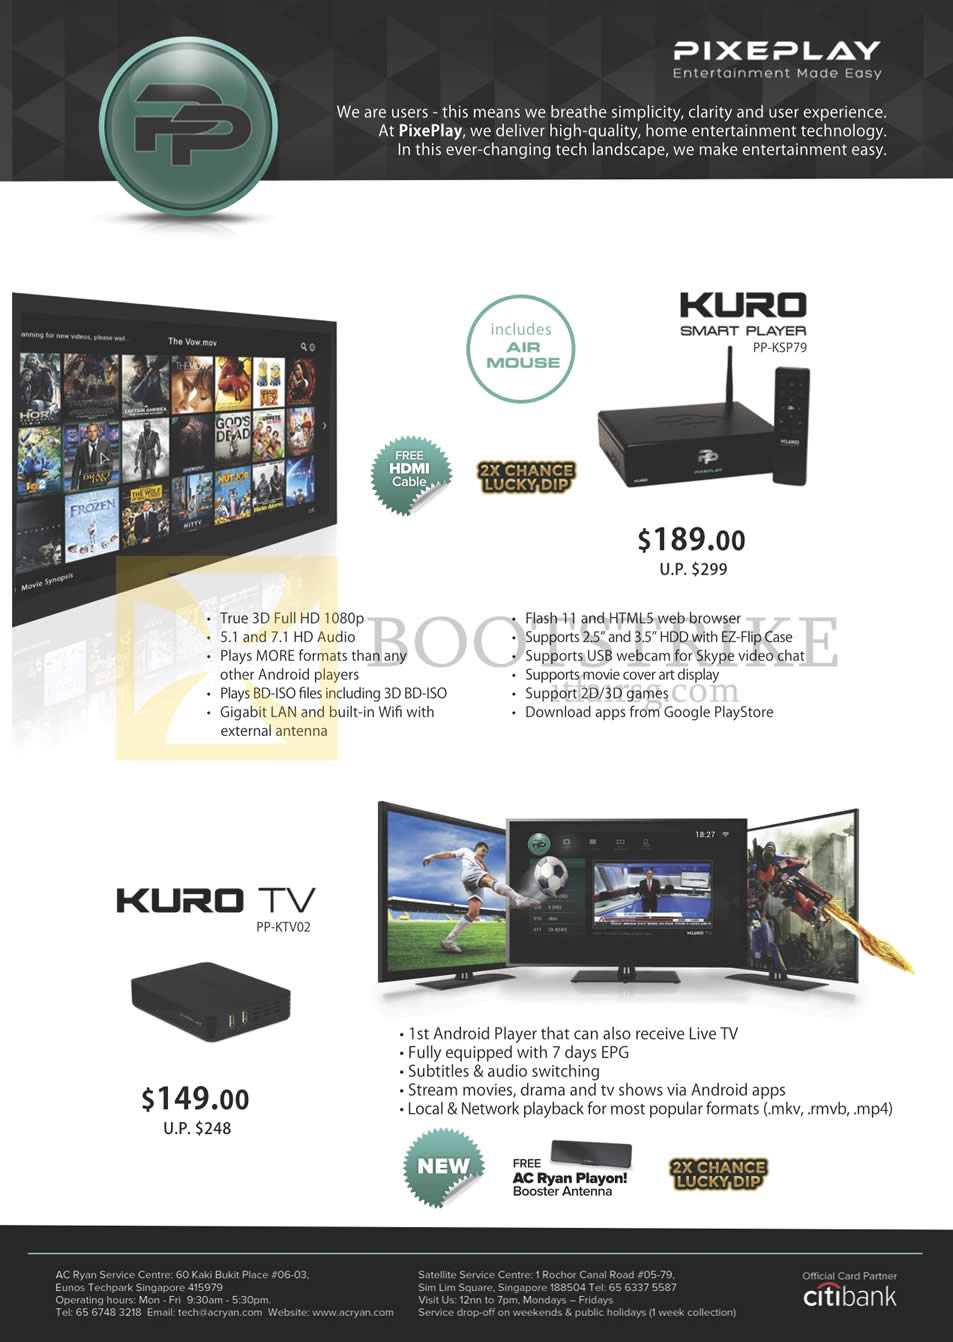 PC SHOW 2015 price list image brochure of AC Ryan Kuro Smart Player, Kuro TV